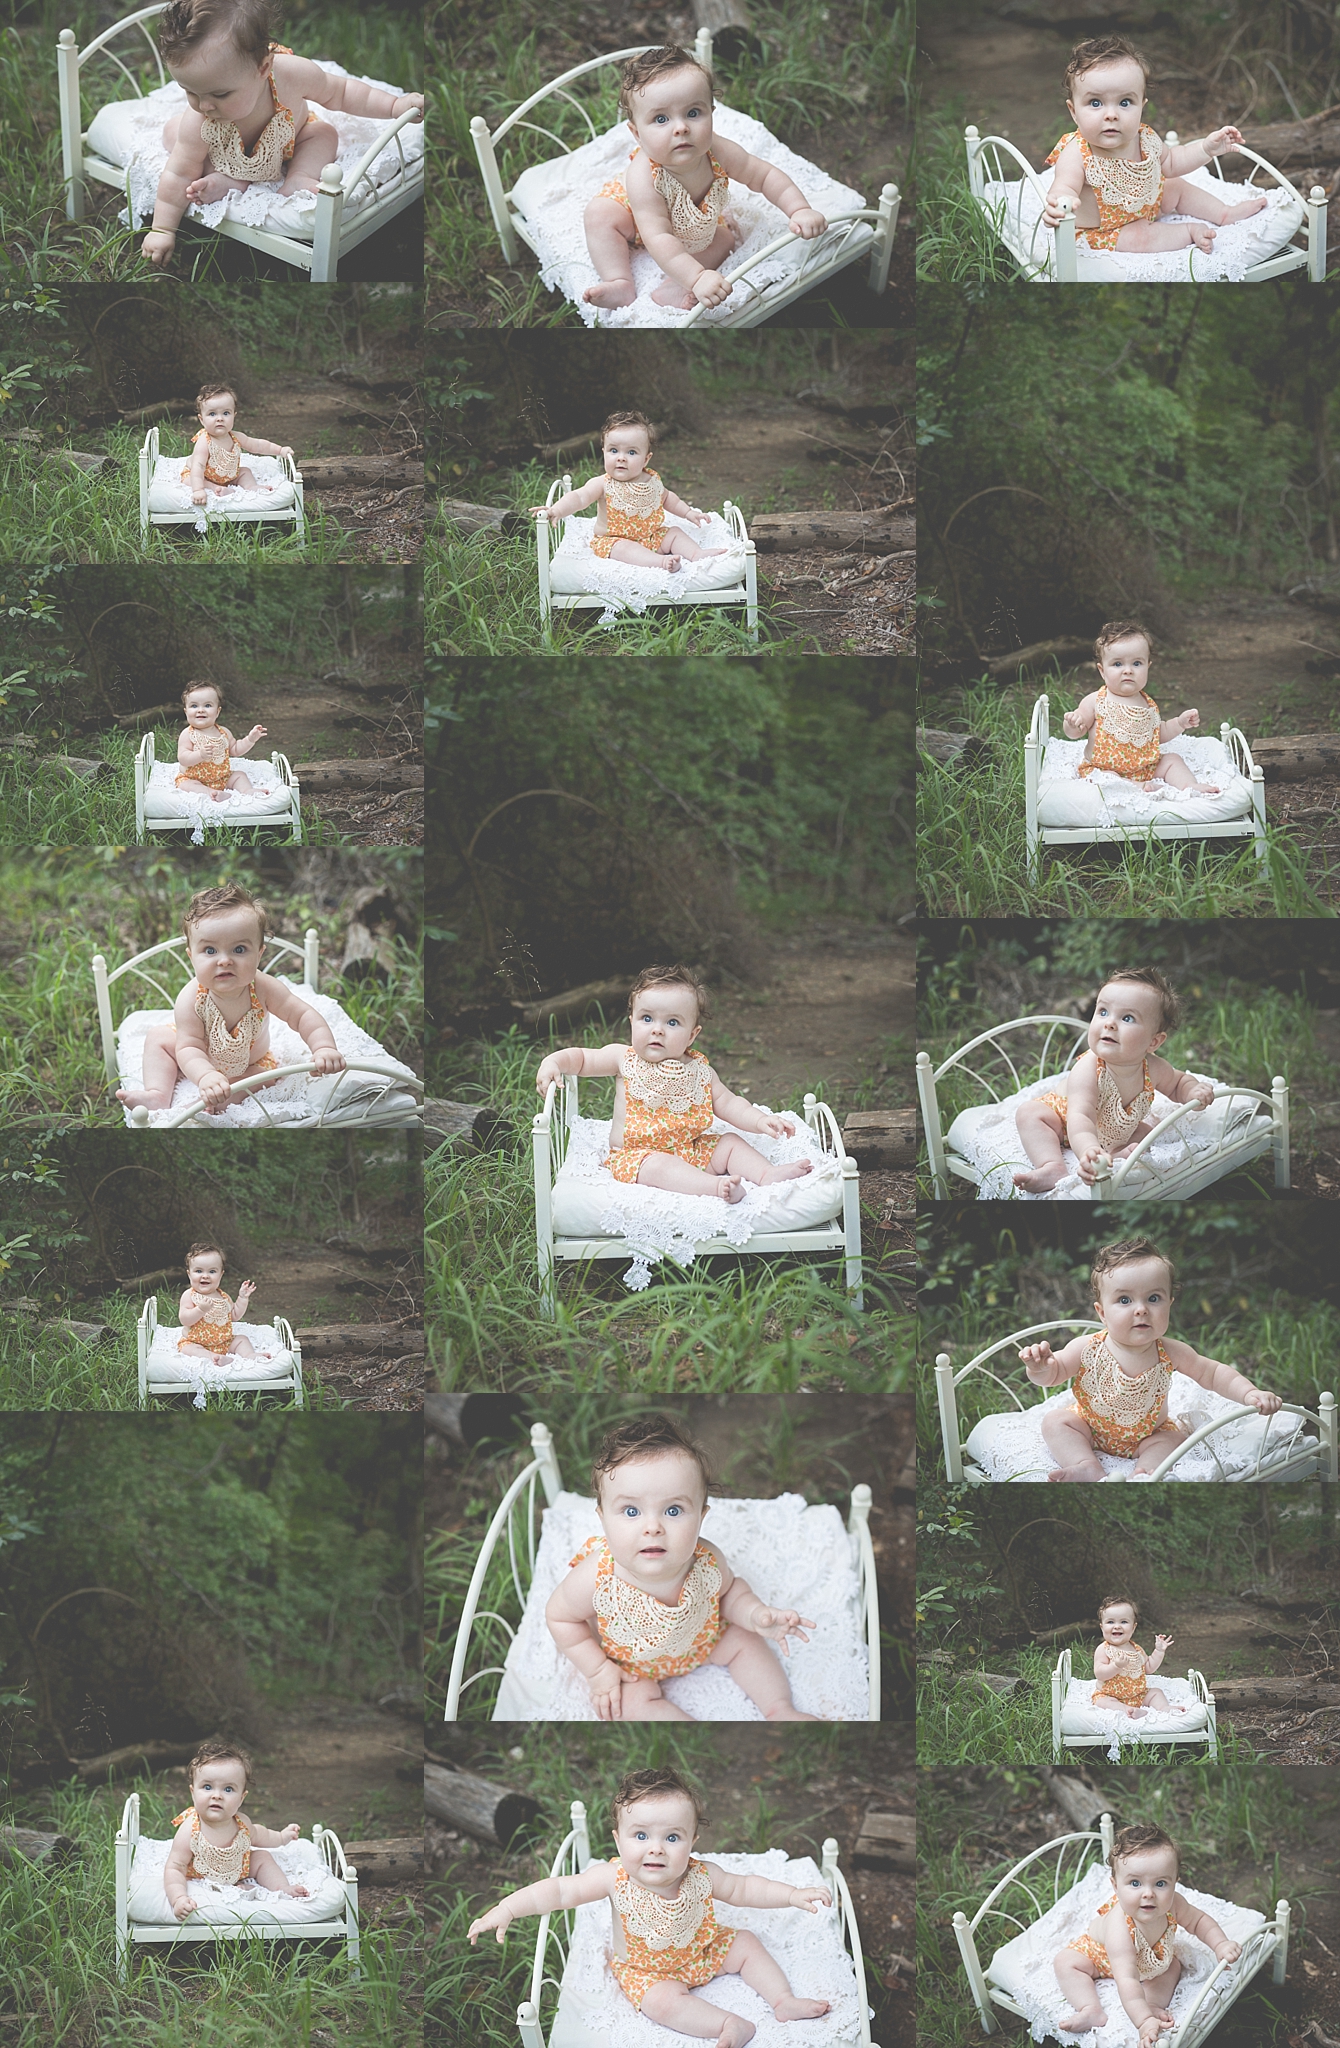 08-23-17lake ozarks missouri family baby outdoor photography mini session5.jpg